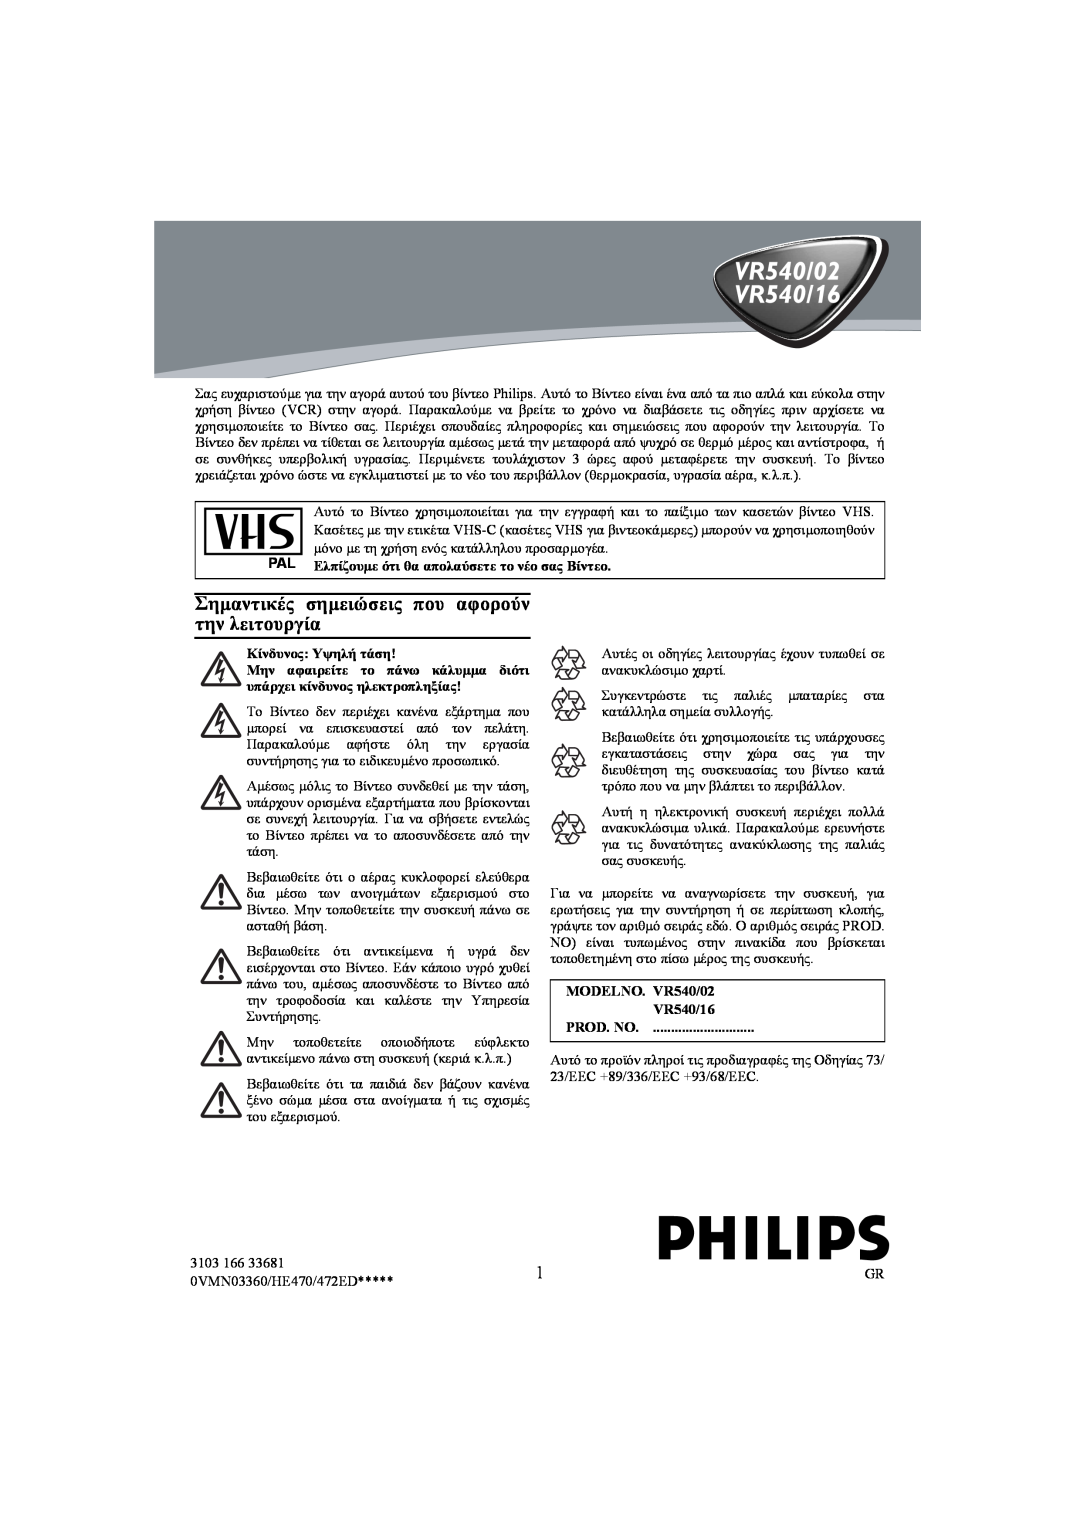 Philips VR540/16 manual Σηµαντικές σηµειώσεις που αφορούν την λειτουργία, Ελπίζουµε ότι θα απολαύσετε το νέο σας Βίντεο 